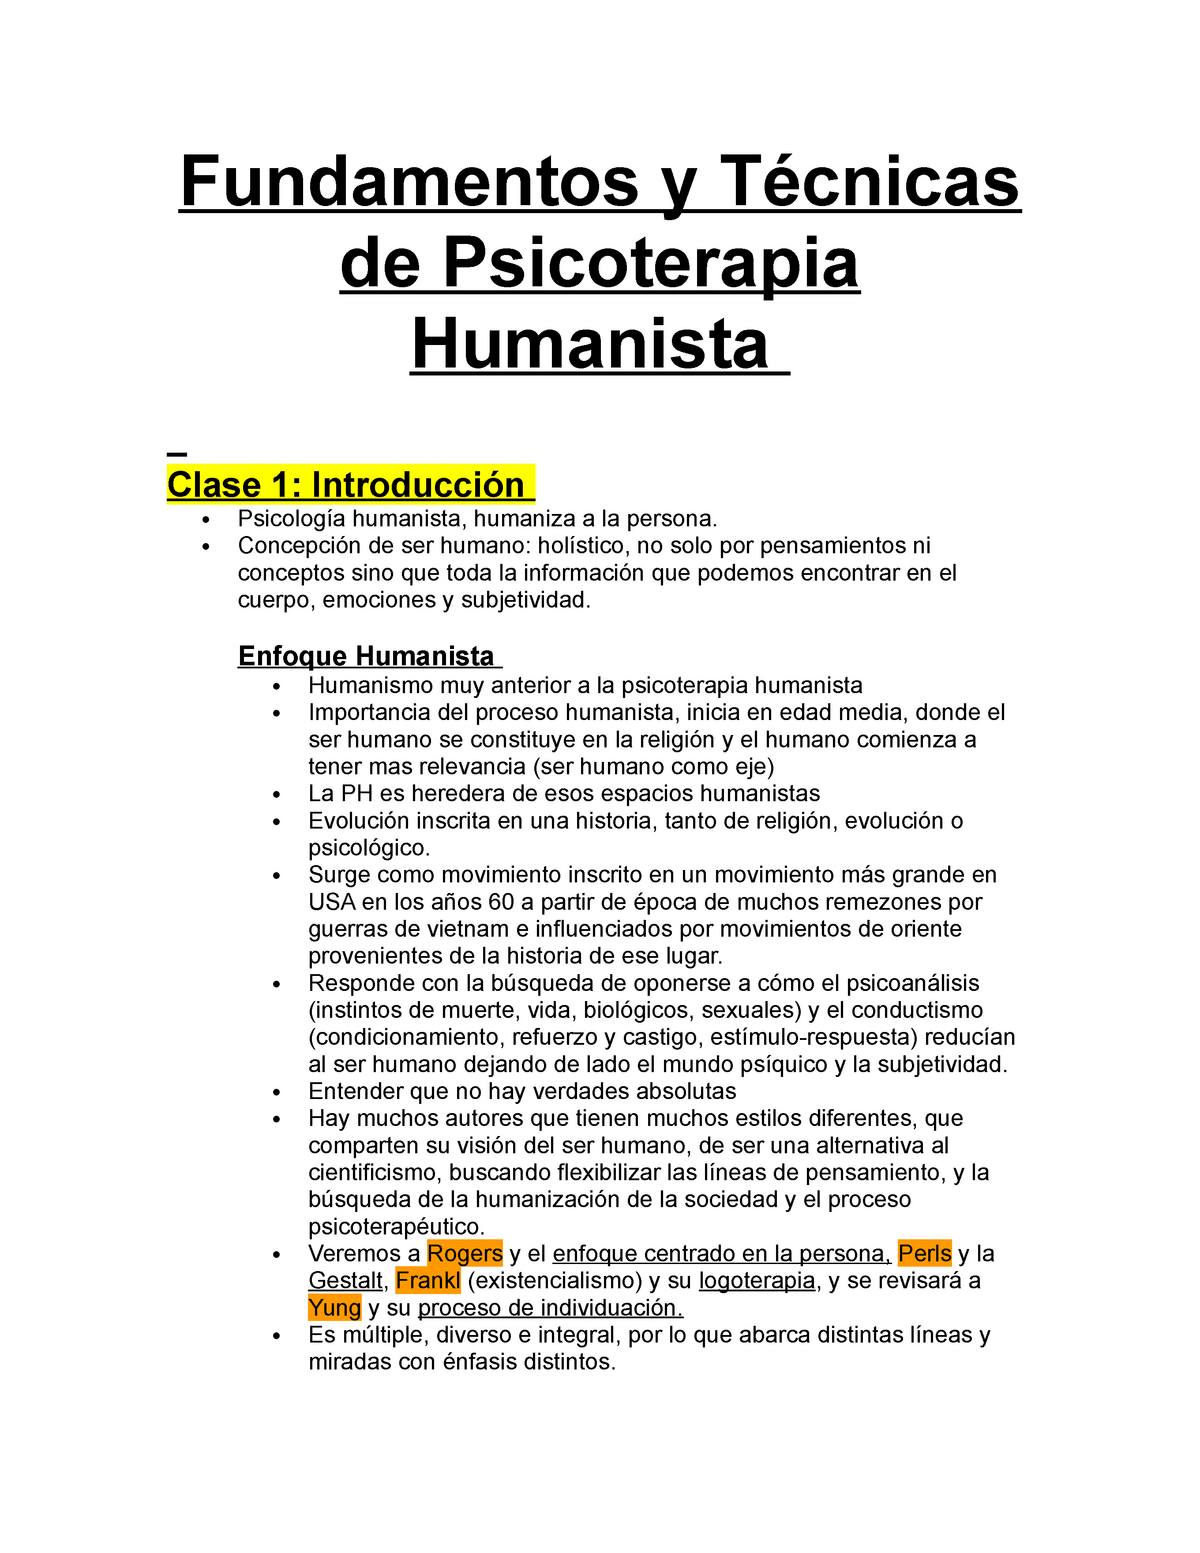 Fundamentos y Técnicas de Psicoterapia Humanista - Fundamentos y Técnicas de  Psicoterapia Humanista - Studocu